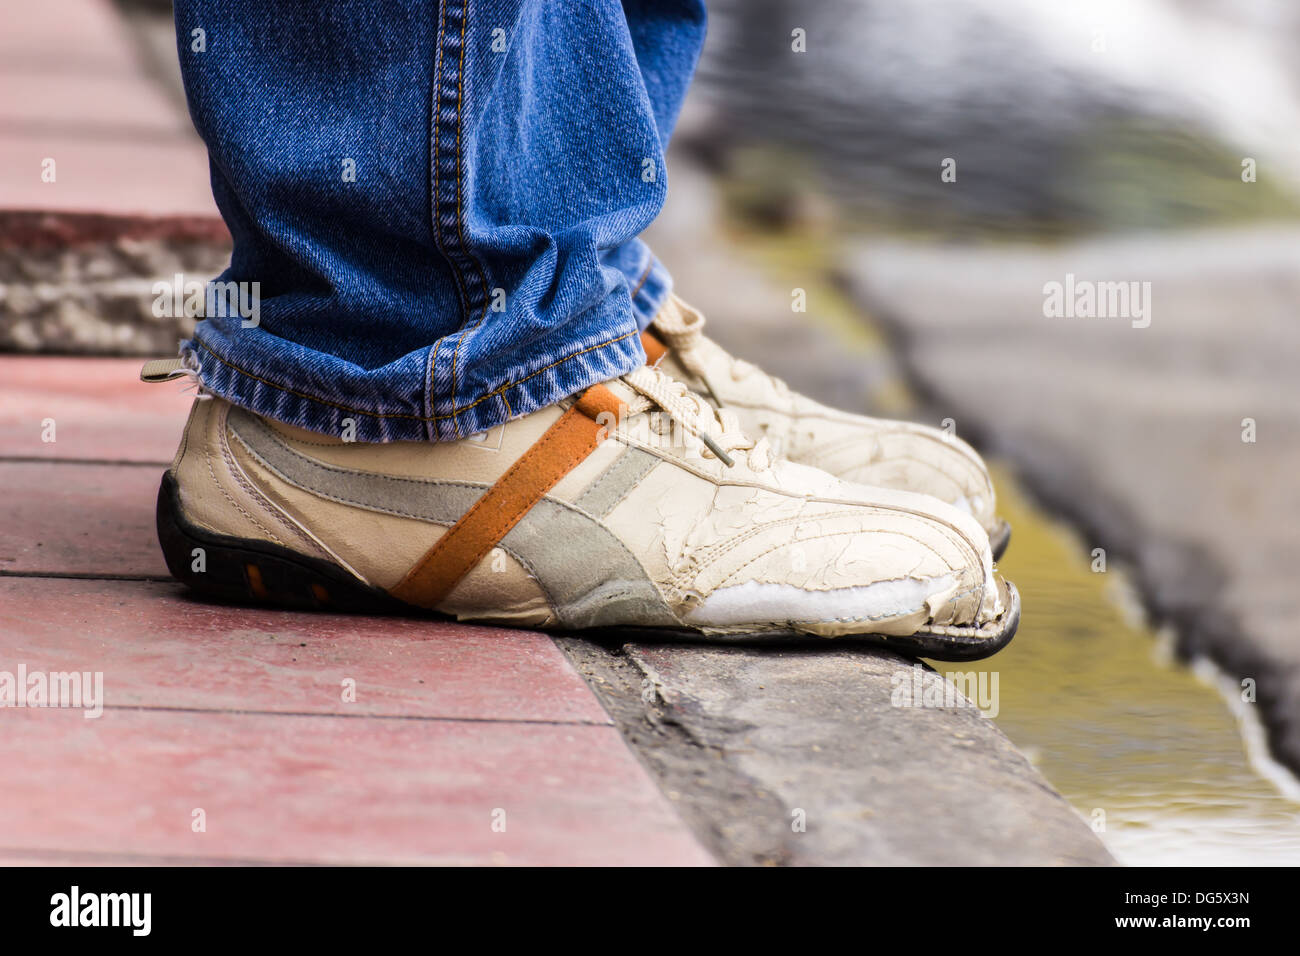 Ripped shoes, waiting someone at a bus stop in Bangkok, Thailand Stock Photo